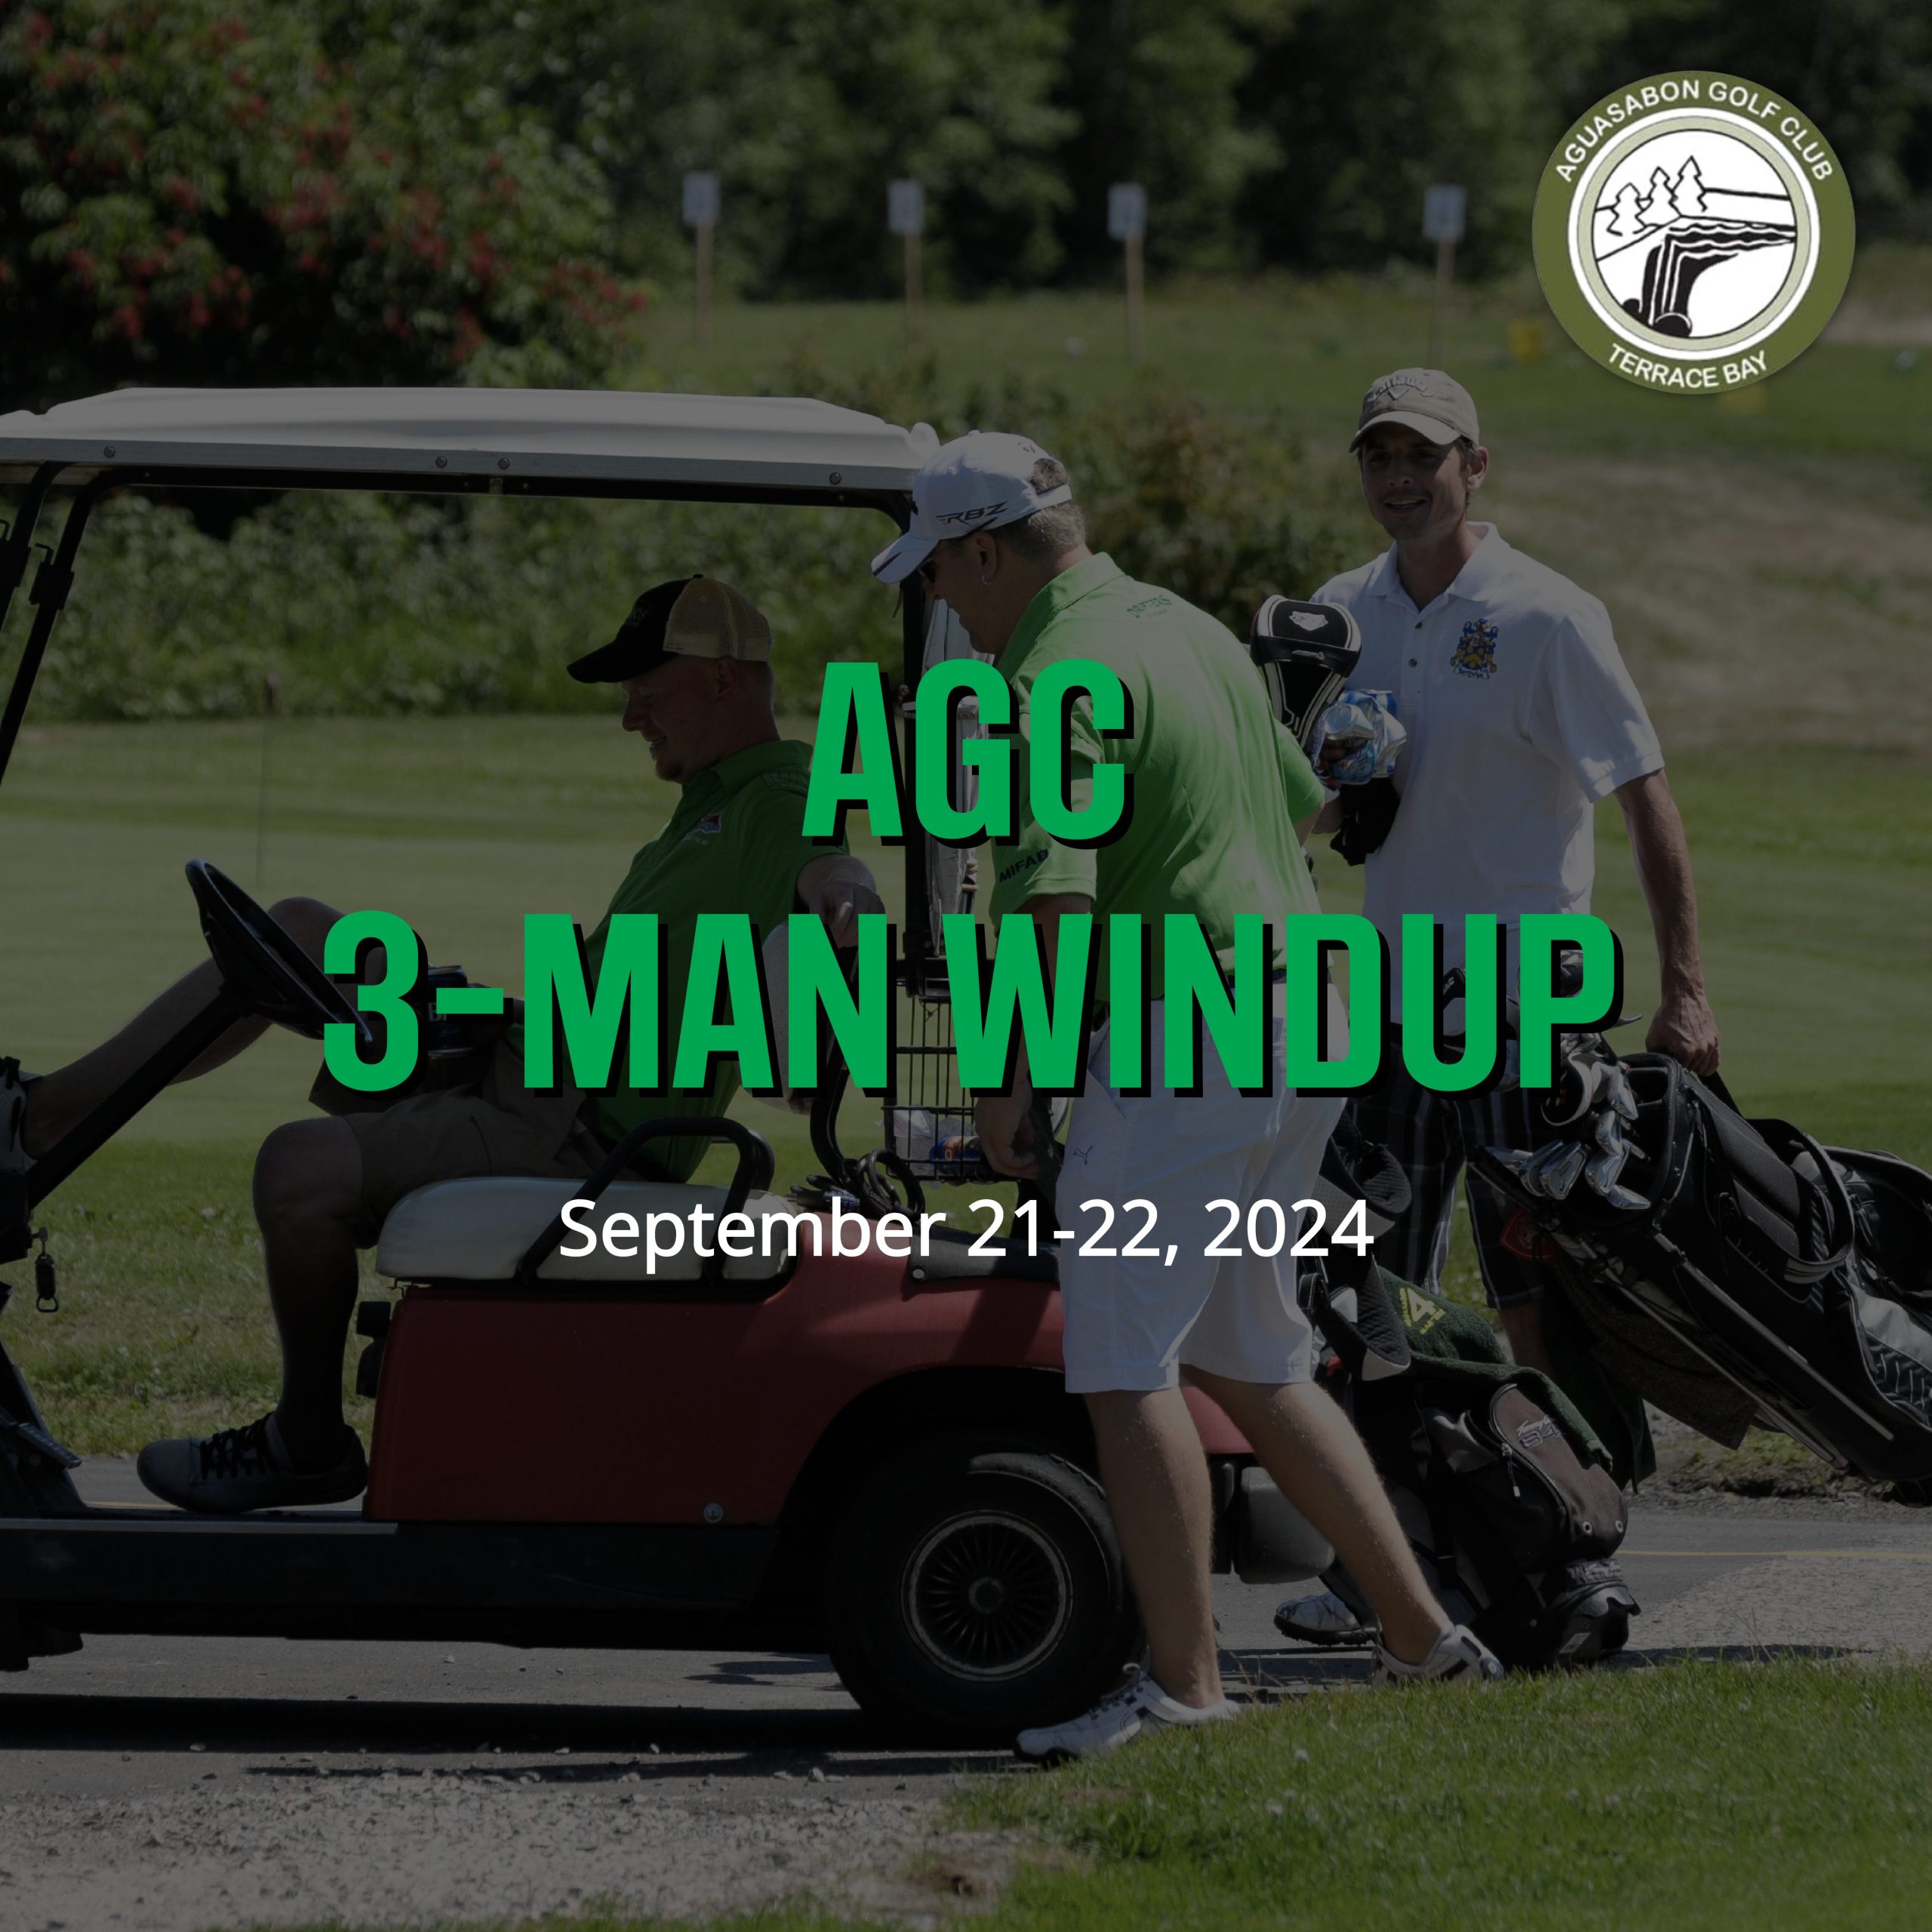 Terrace Bay Golf Tournaments - Aguasabon Golf Club 3 Man Windup